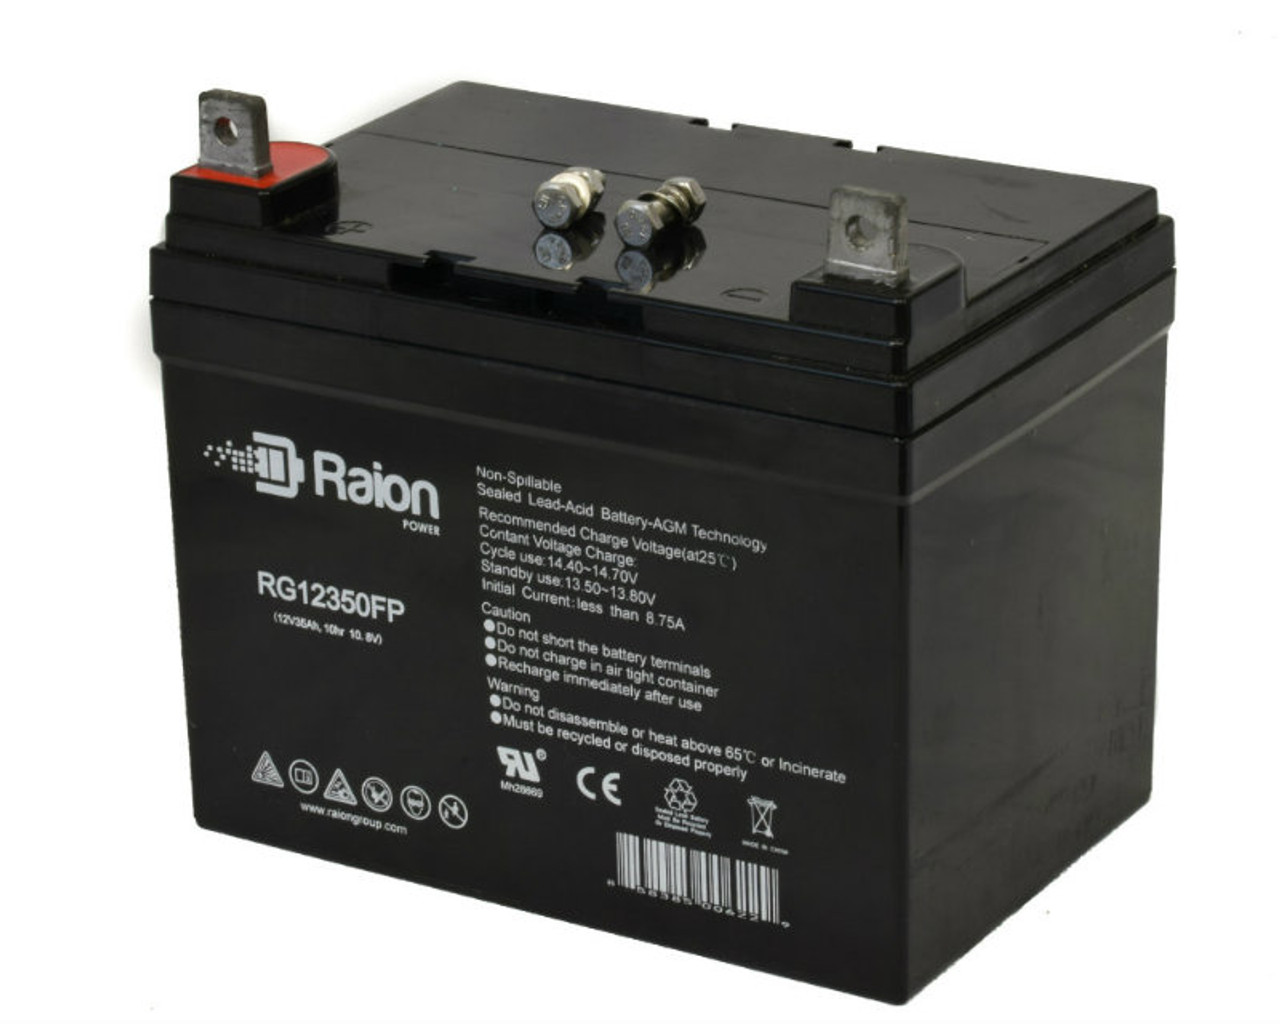 Raion Power Replacement 12V 35Ah RG12350FP Battery for Grasshopper 225